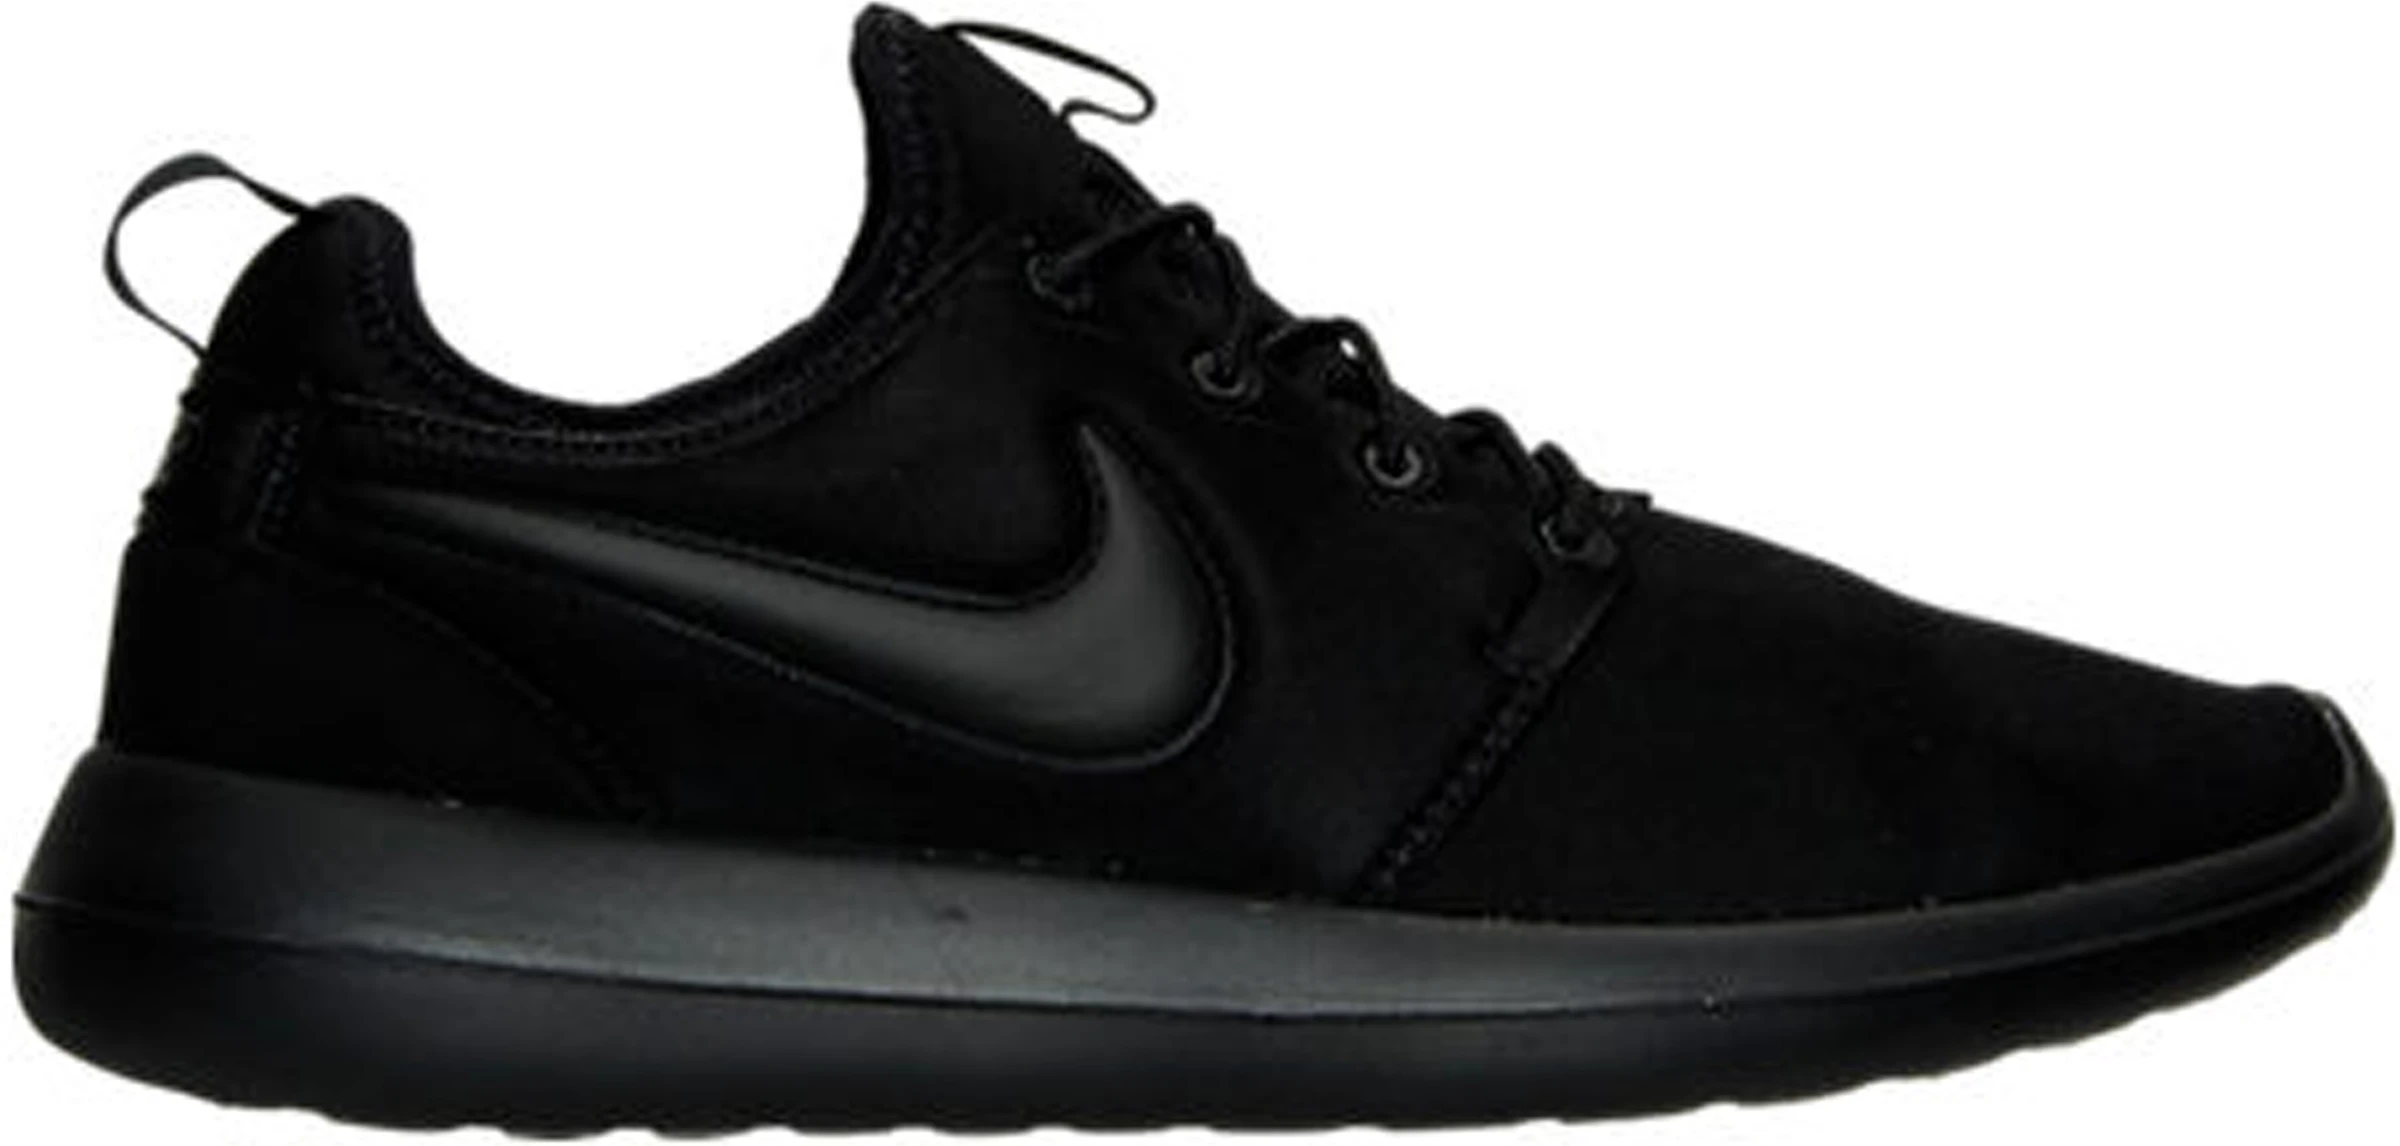 Grave oferta antecedentes Nike Roshe Two Triple Black - 844656-001 - ES